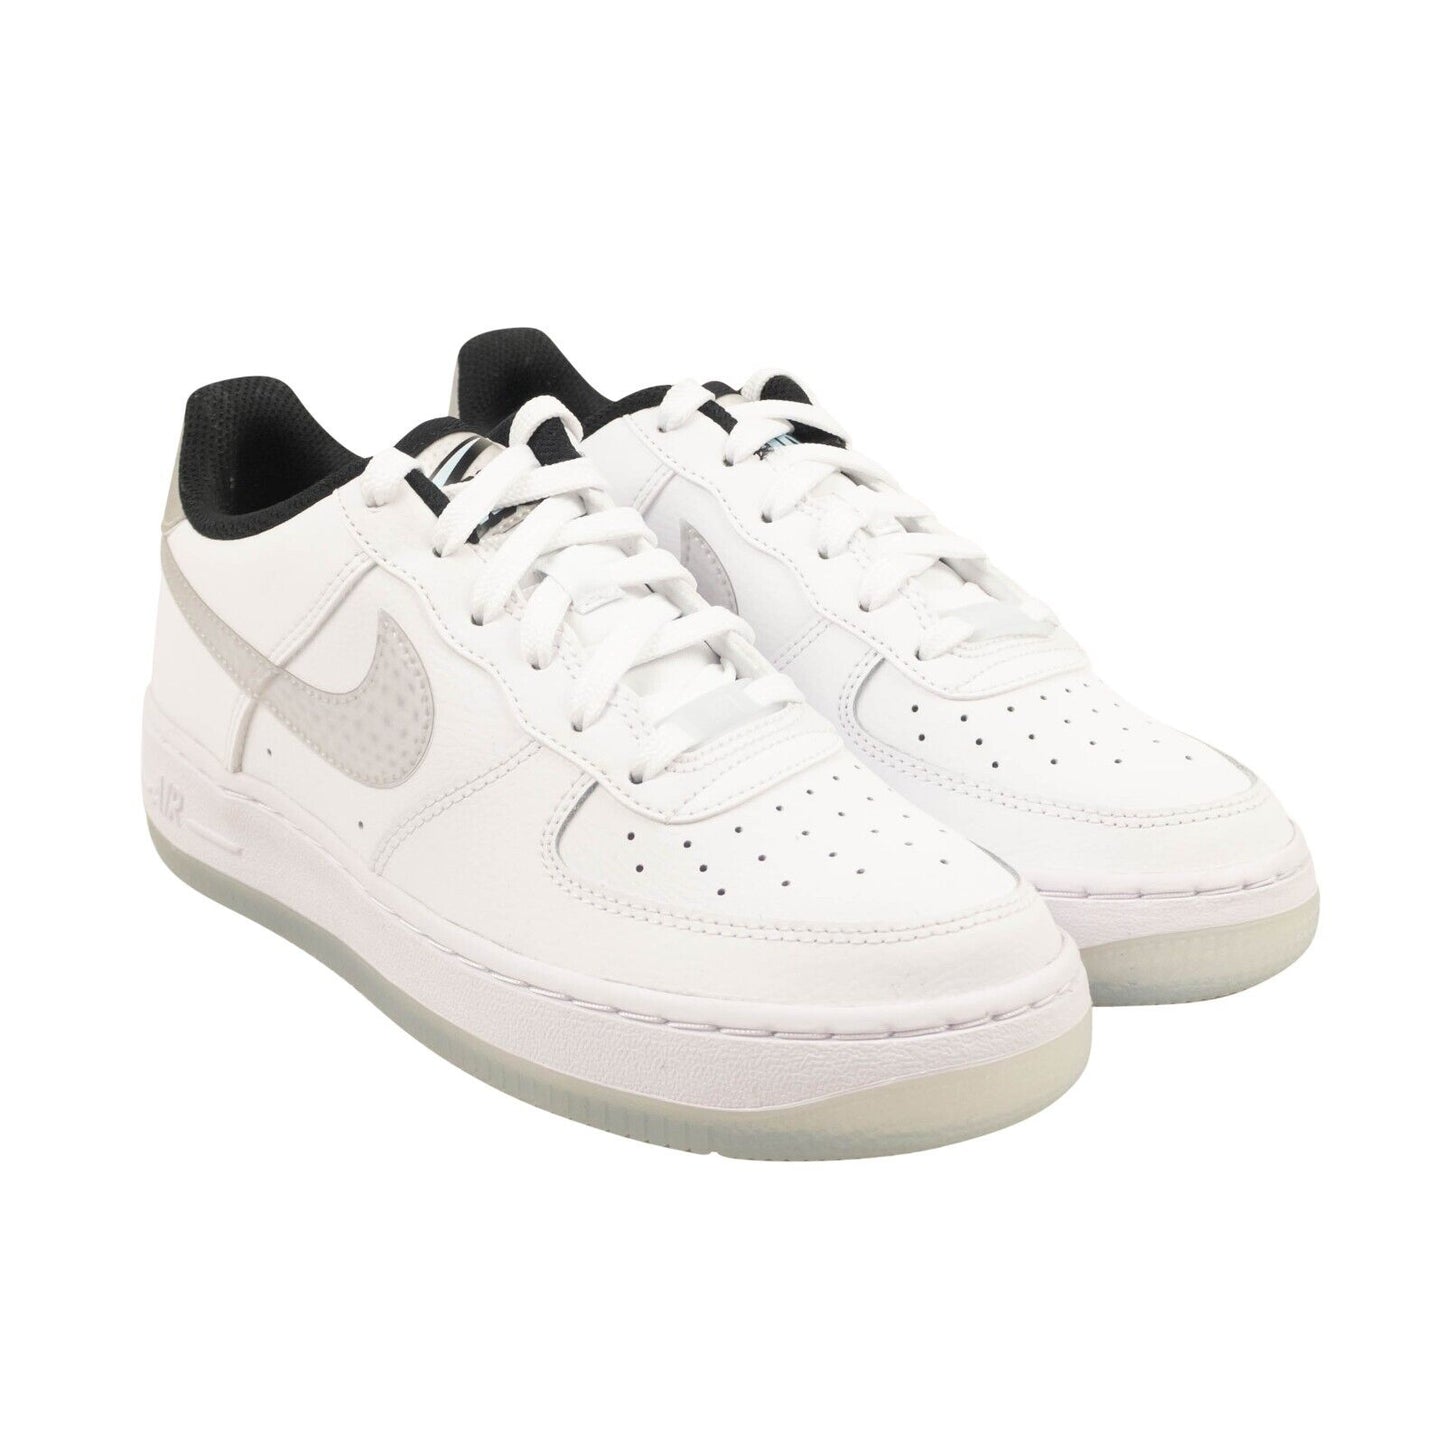 Nike Air Force 1 Lv8 Ksa Sneakers - White